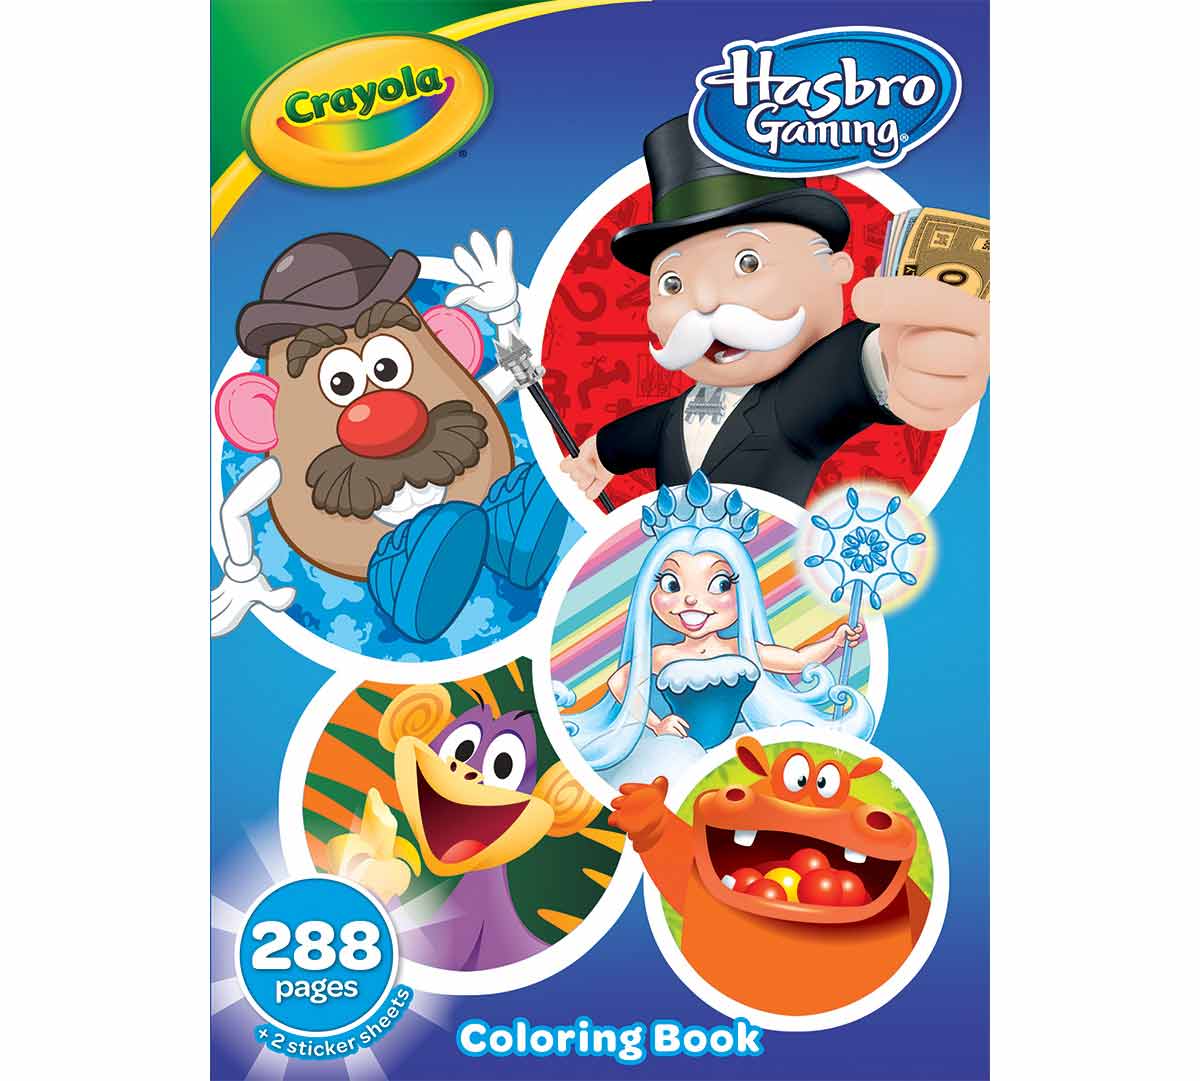 Hasbro Gaming Coloring Book, 288 Pages  | Crayola